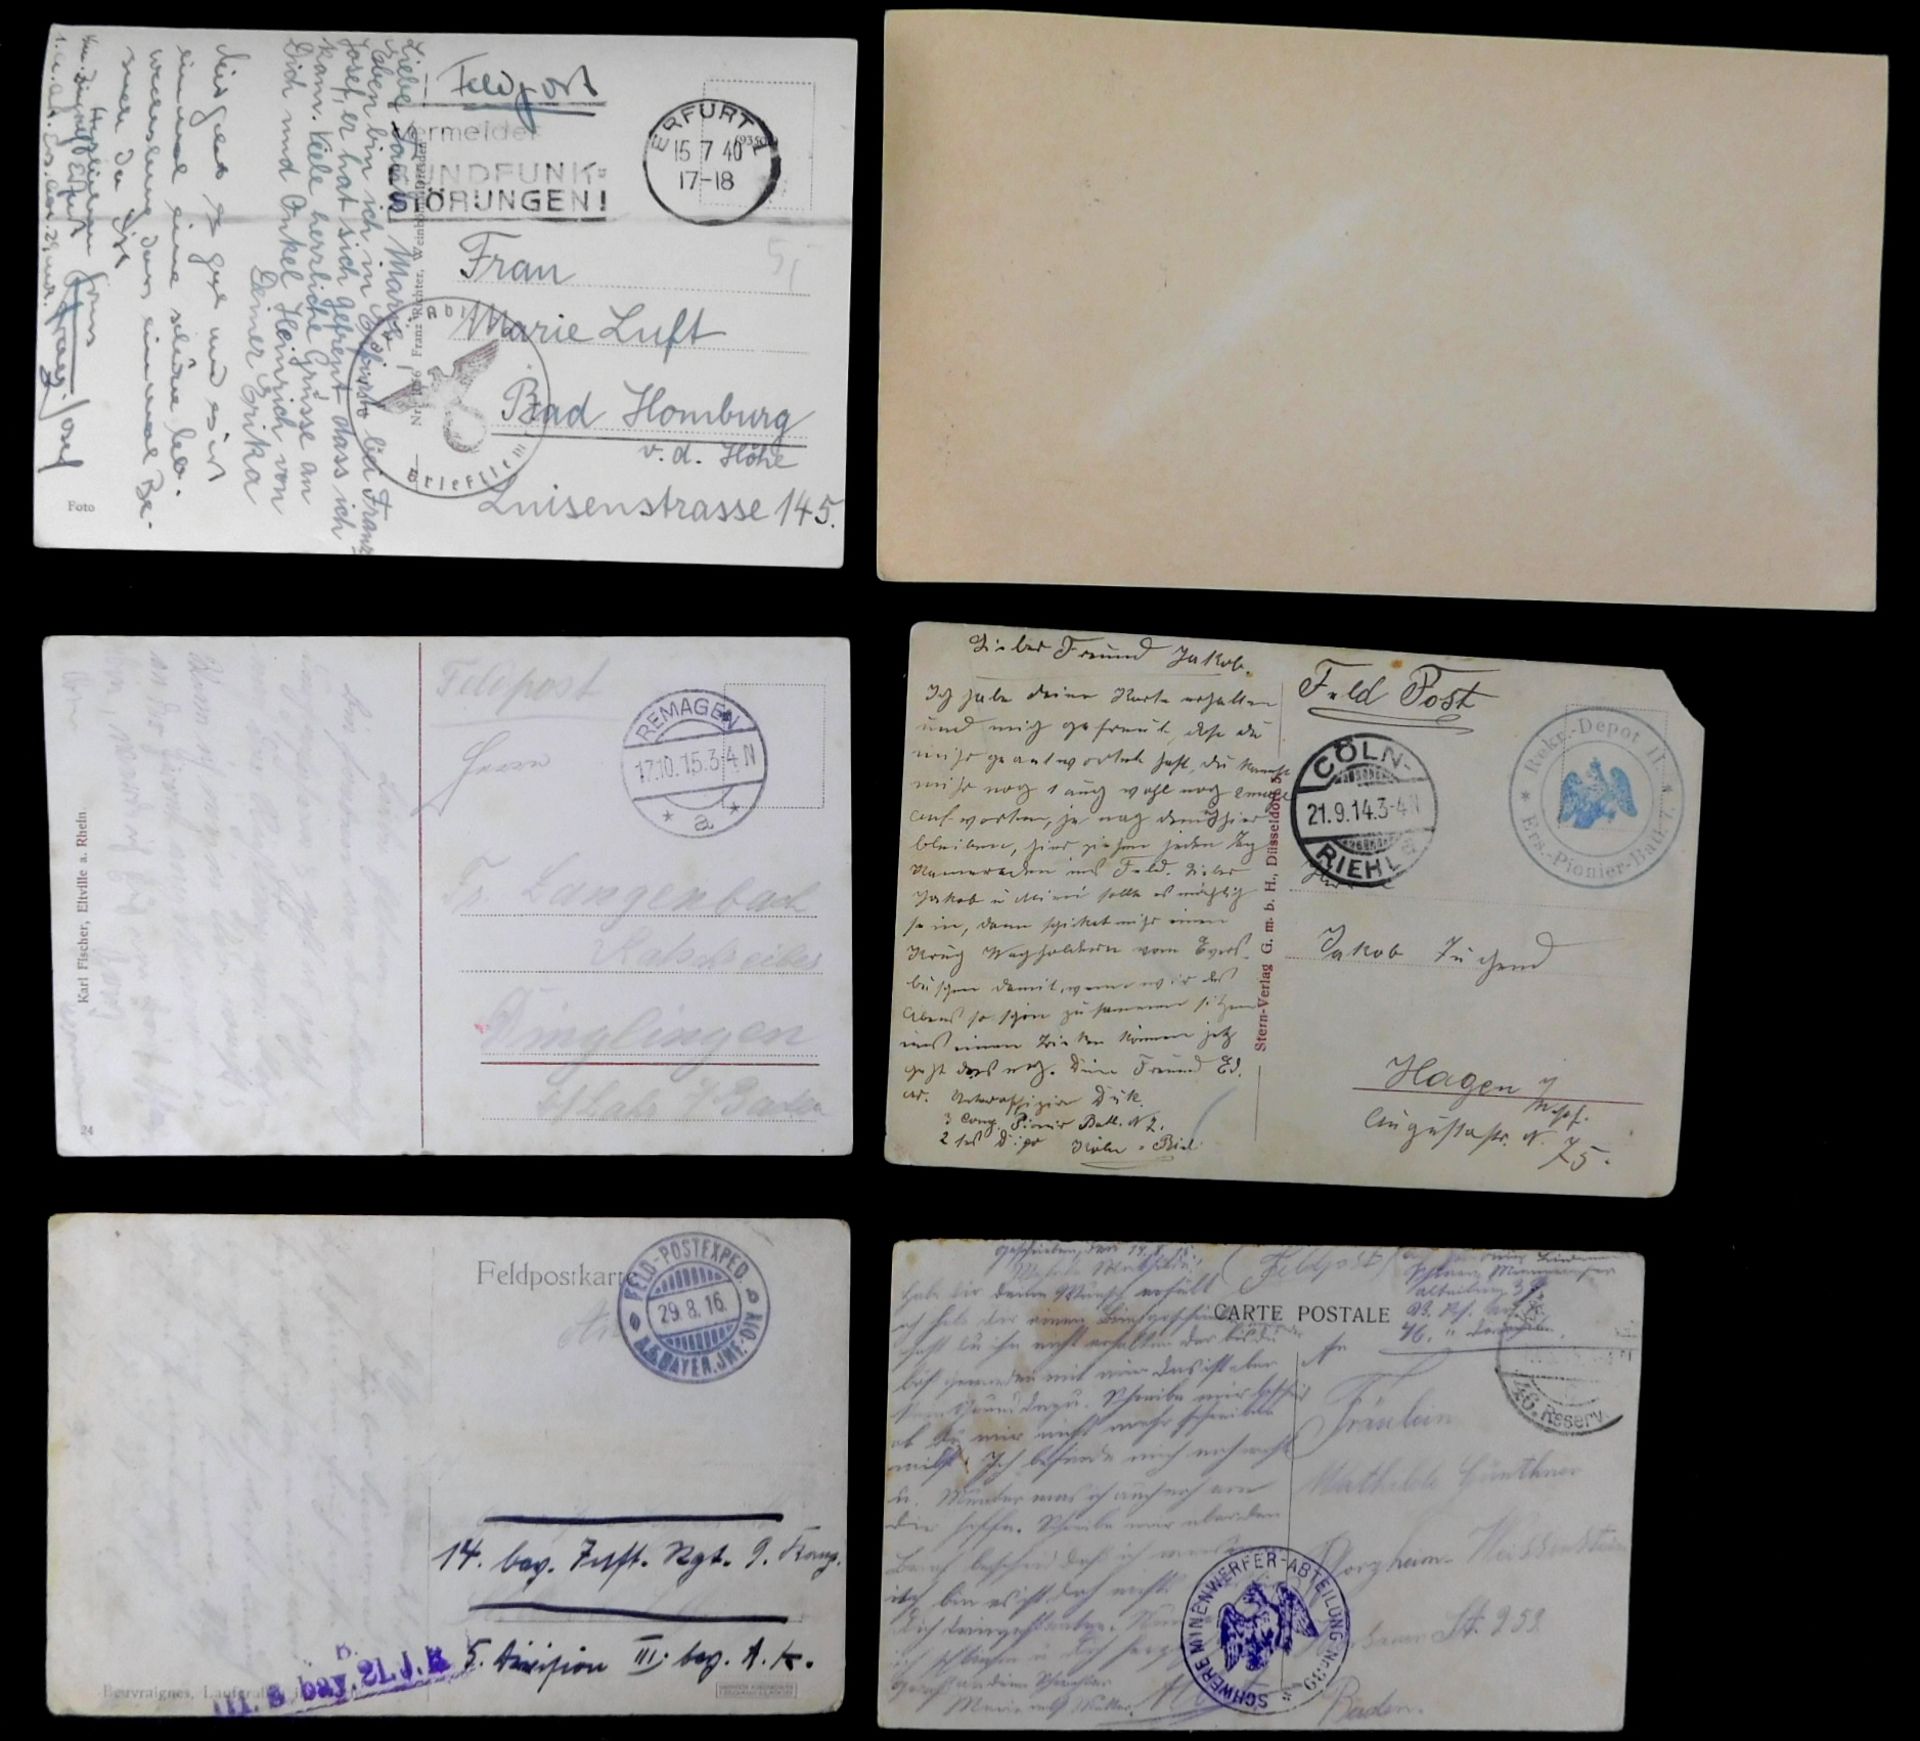 5 Feldpostkarten 1./2. Weltkrieg plus Rudolf Nebel Autogramm "Raketenflugplatz Berlin" - Bild 2 aus 2